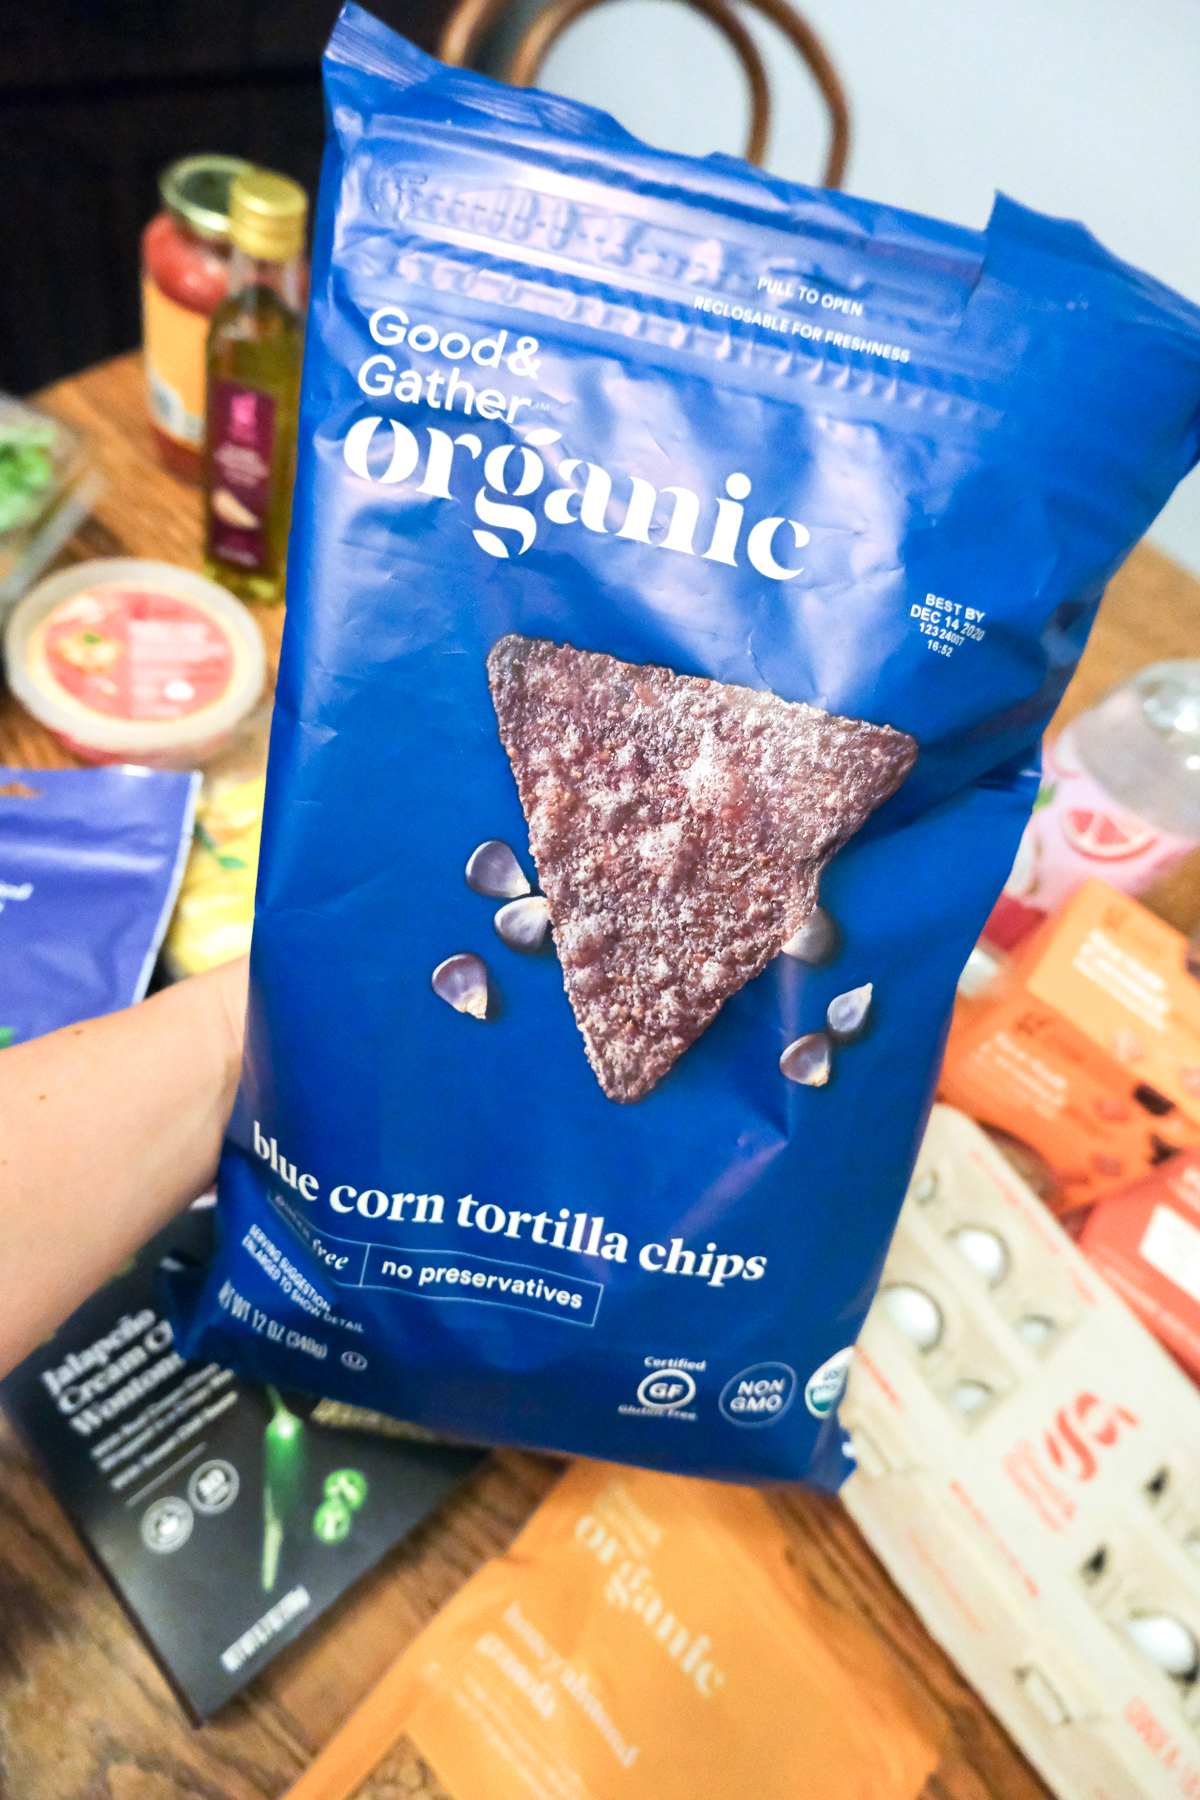 organic blue tortilla chips Good & Gather from Target